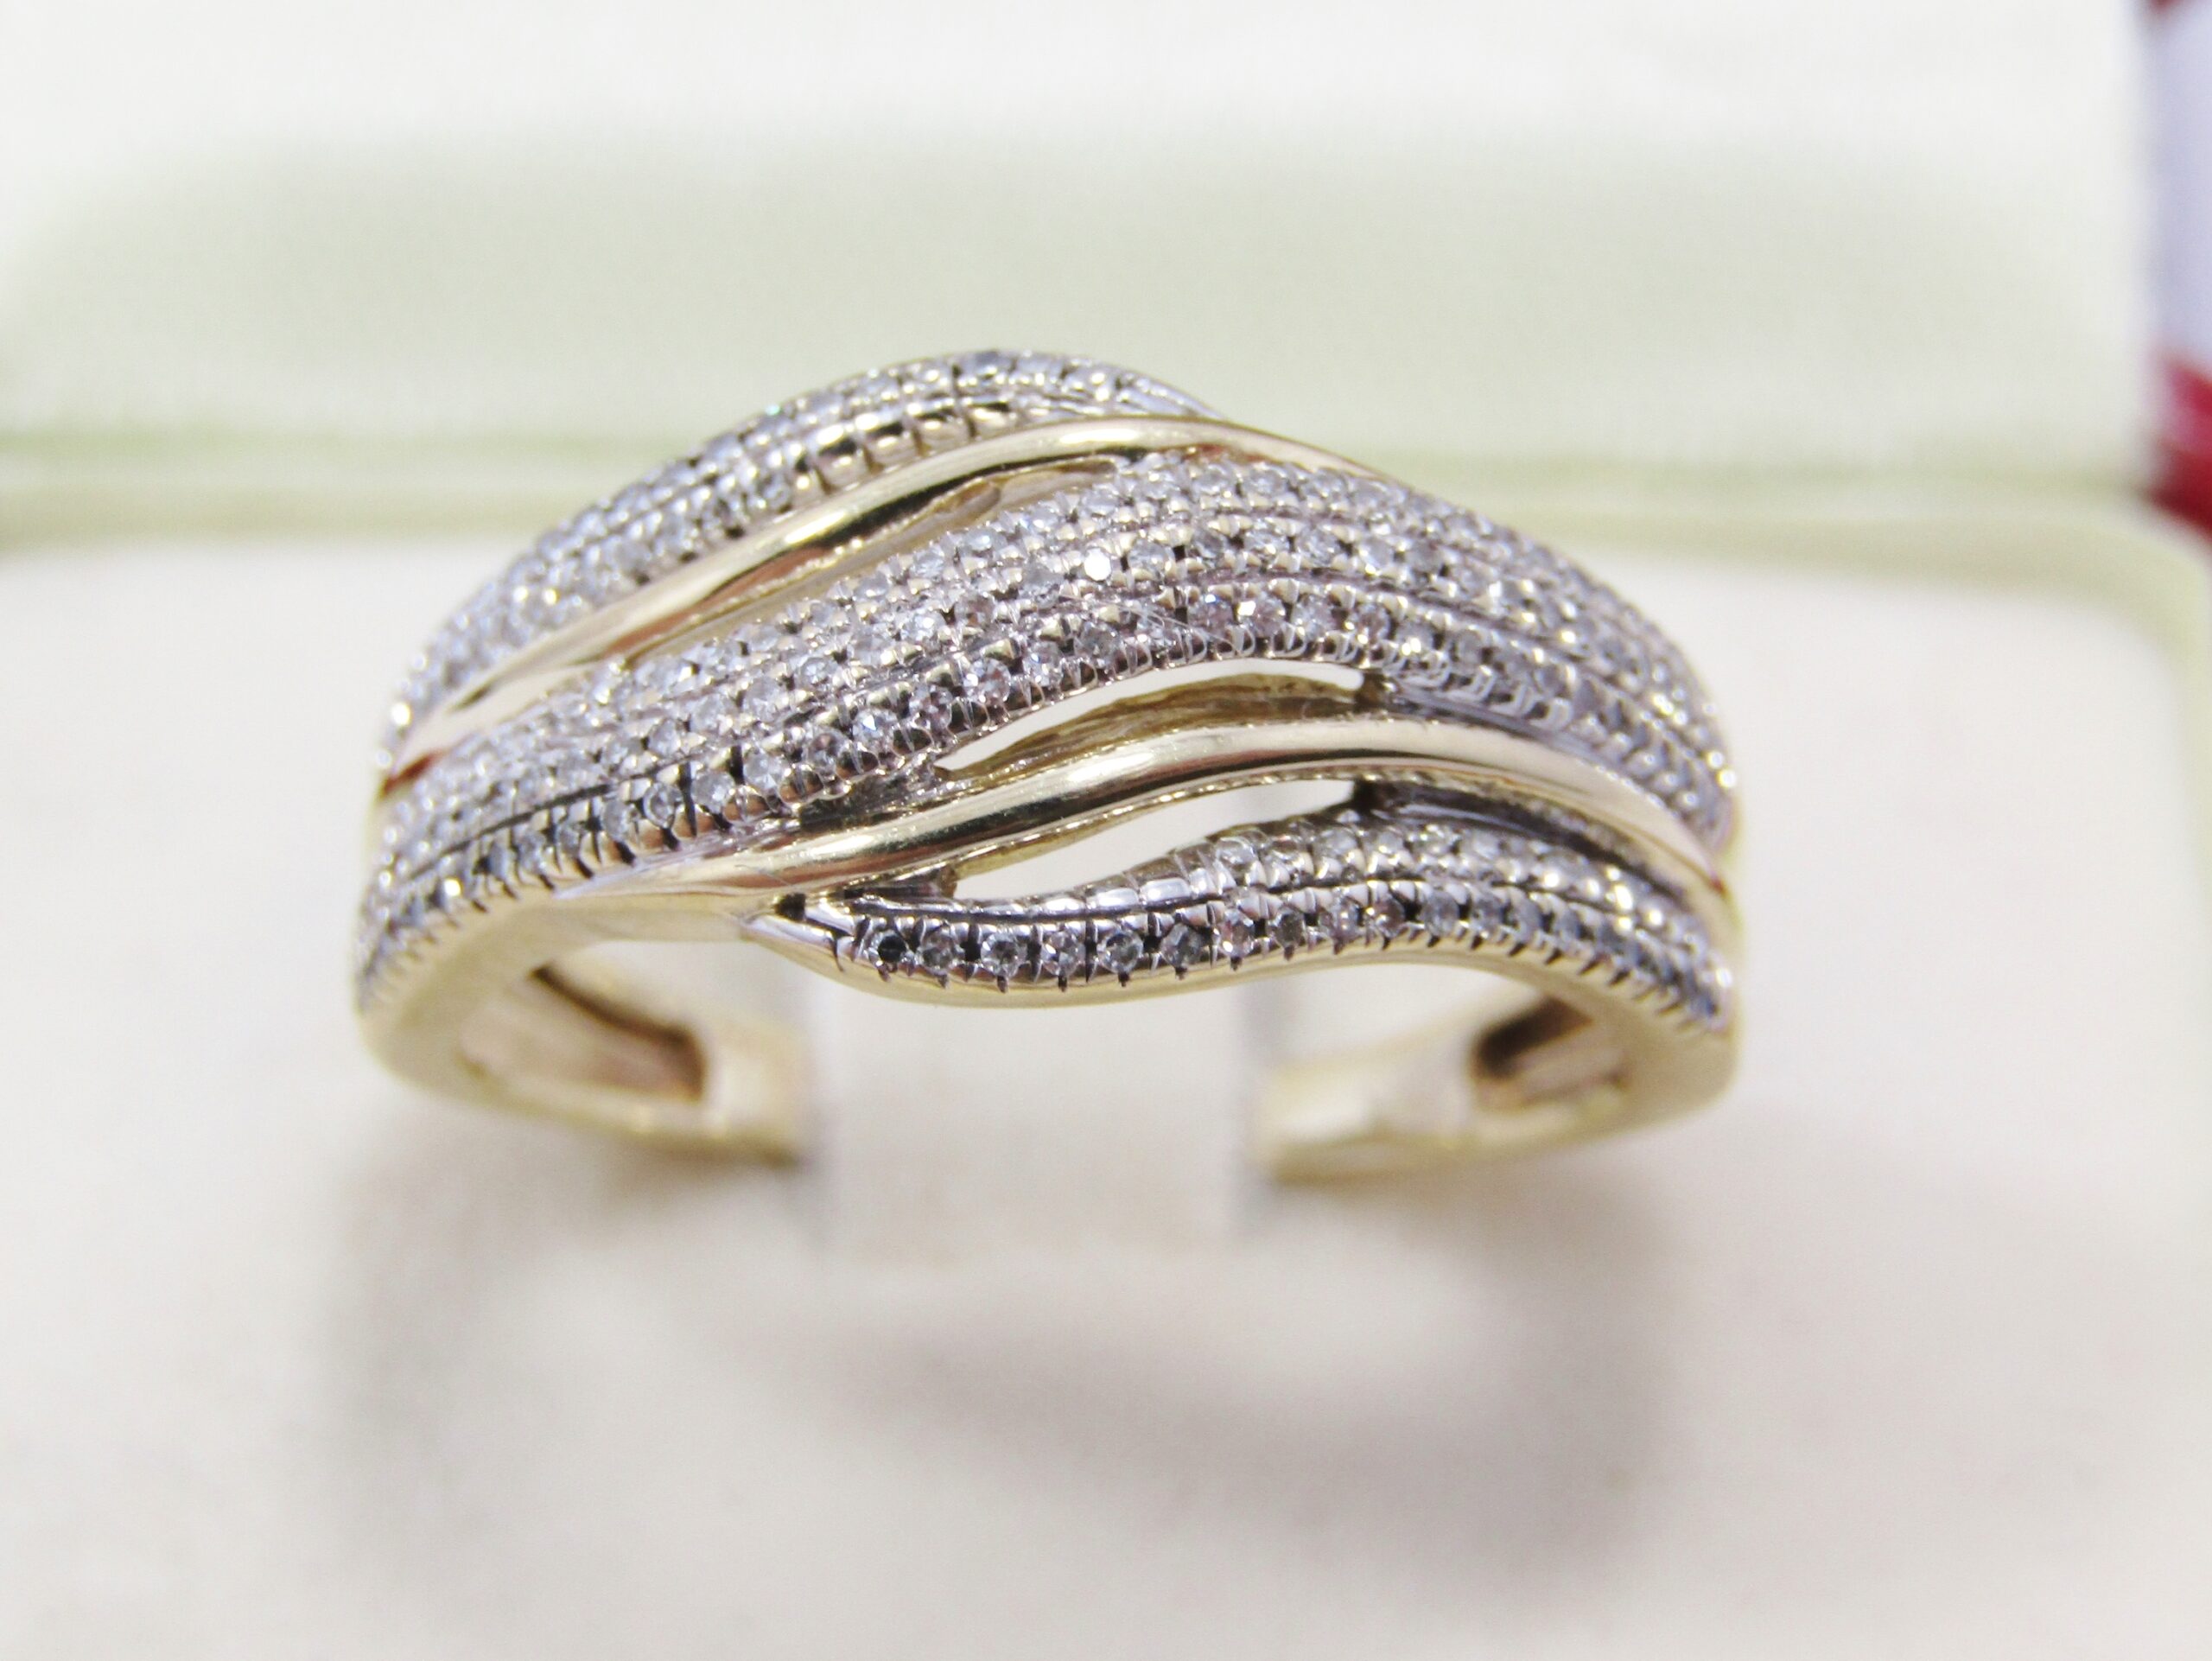 Beautiful Wavy Design 9CT Gold Ring with Diamonds